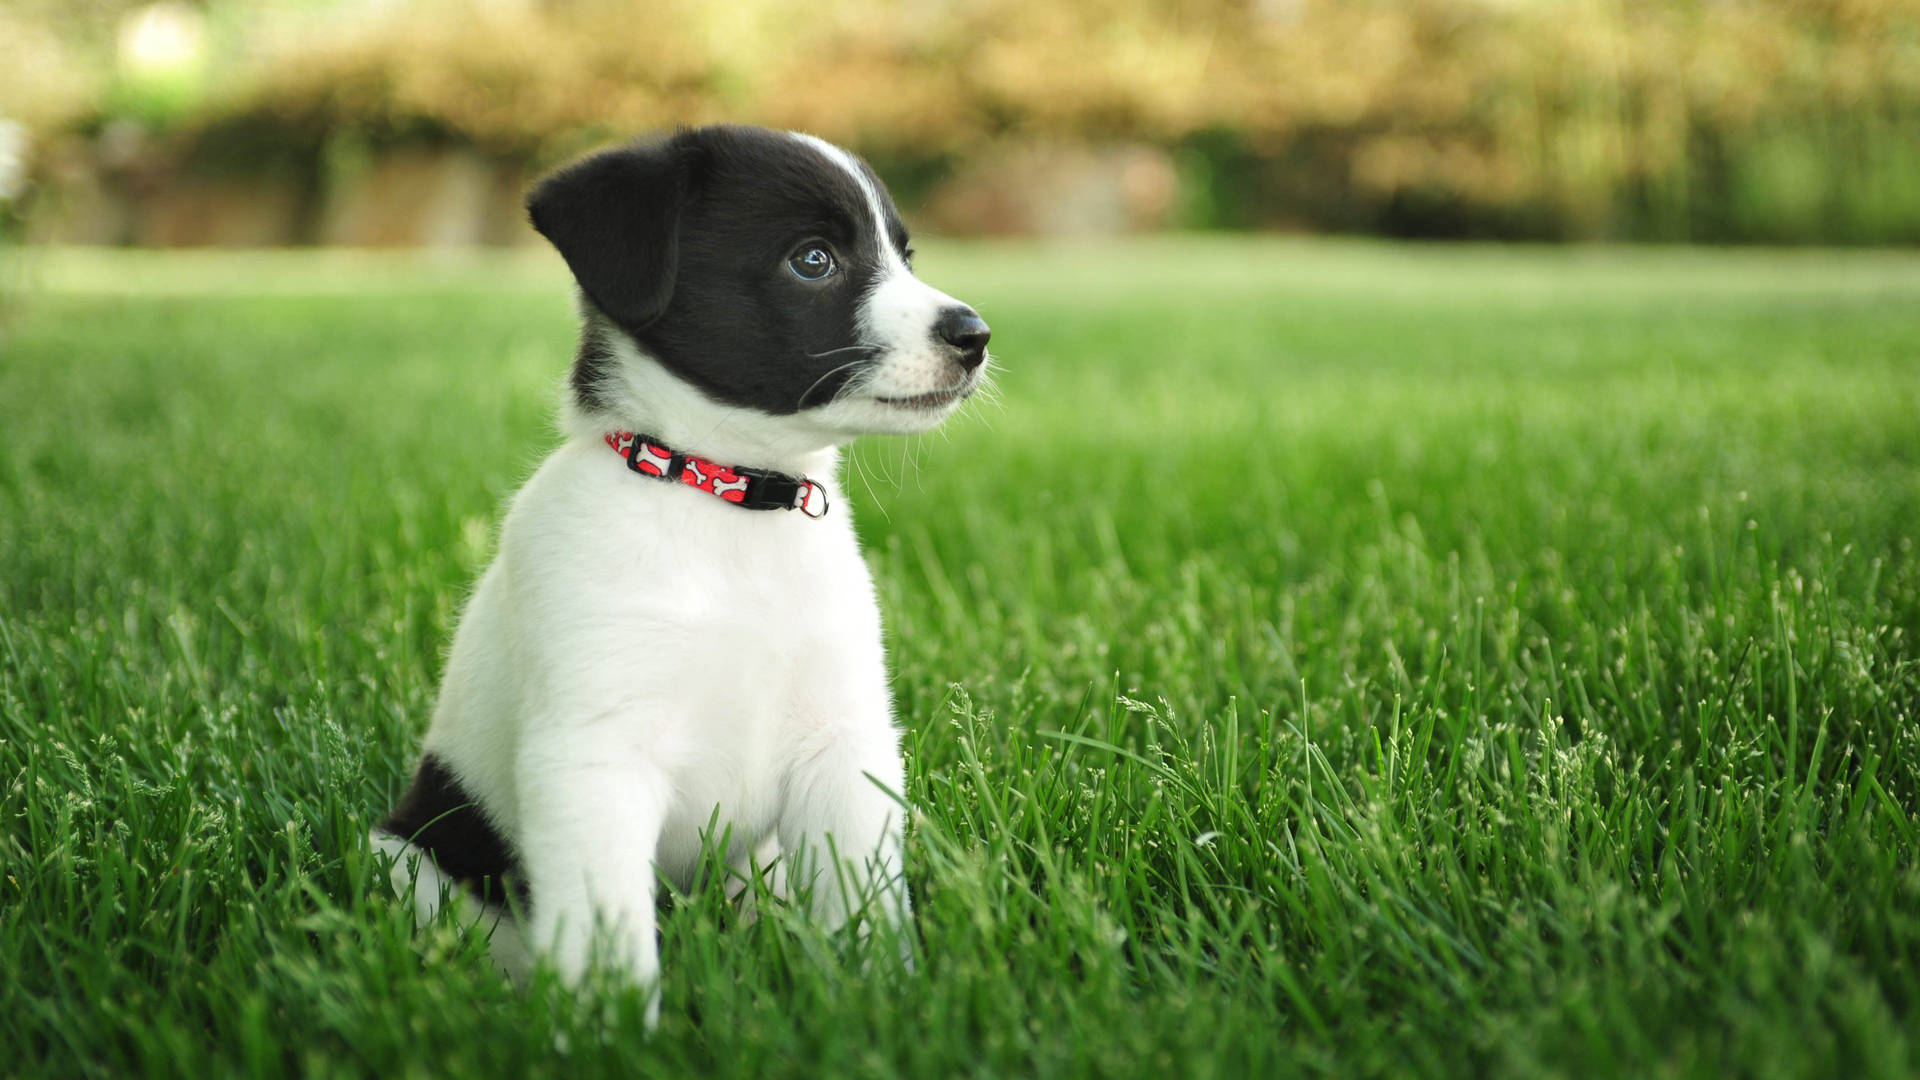 Puppy On A Mowed Grass